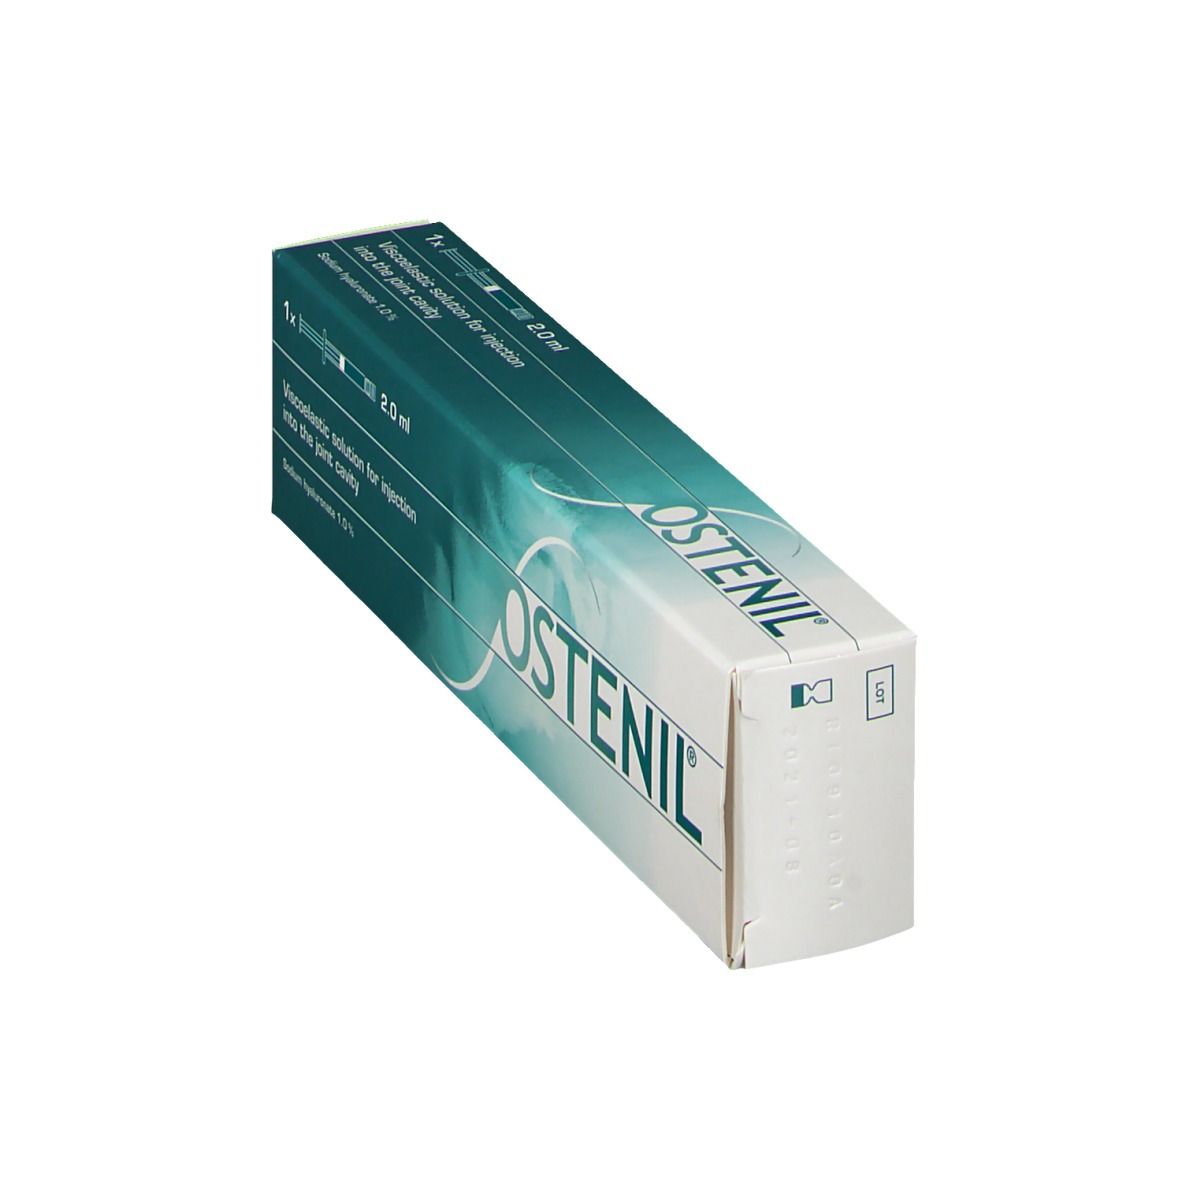 Ostenil Injection 20 mg / 2 ml